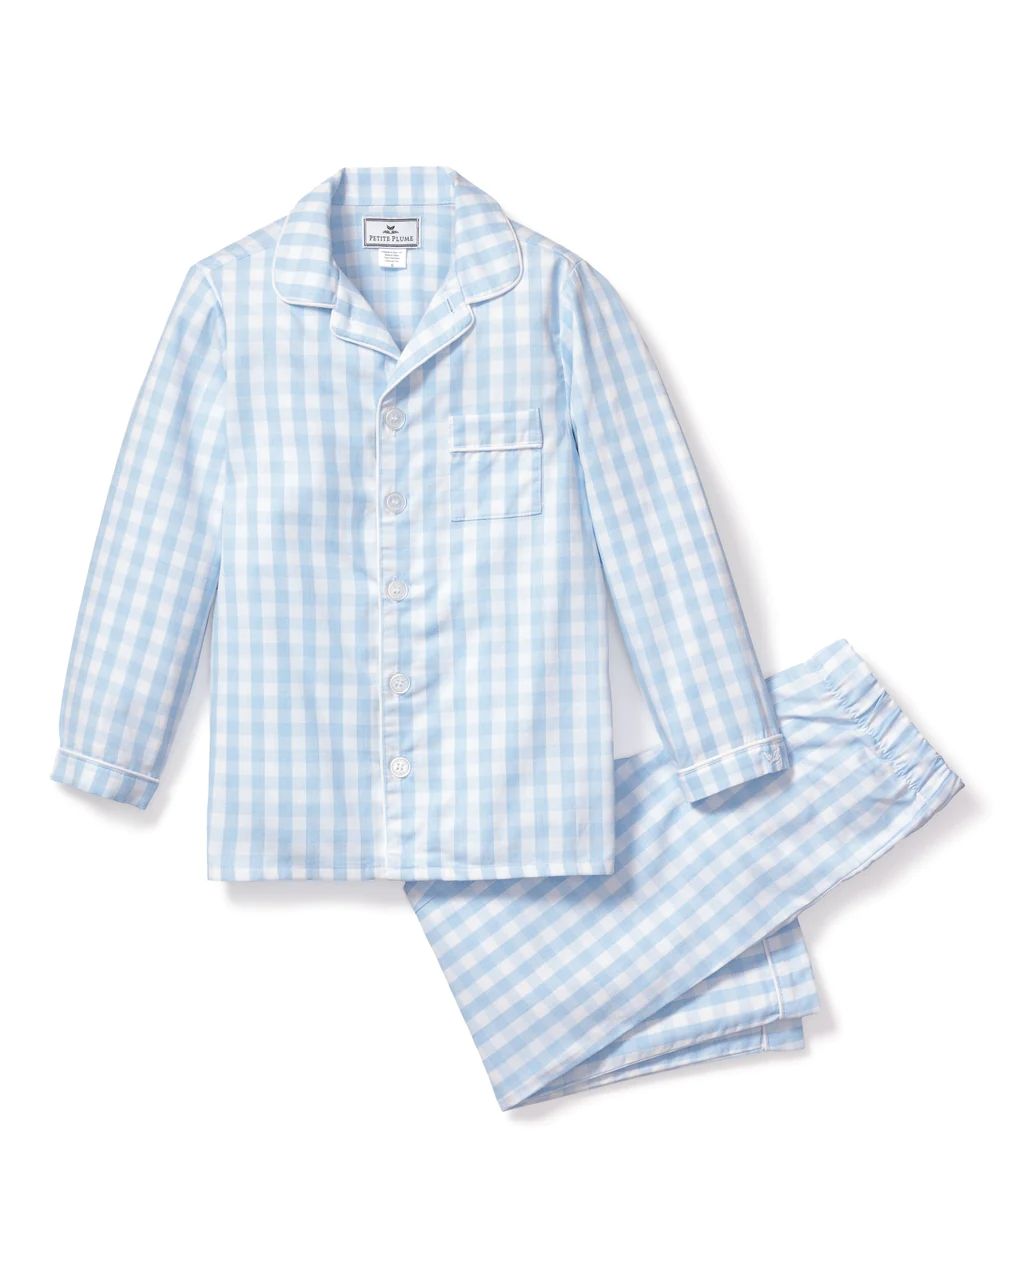 Kid's Twill Pajama Set in Light Blue Gingham | Petite Plume